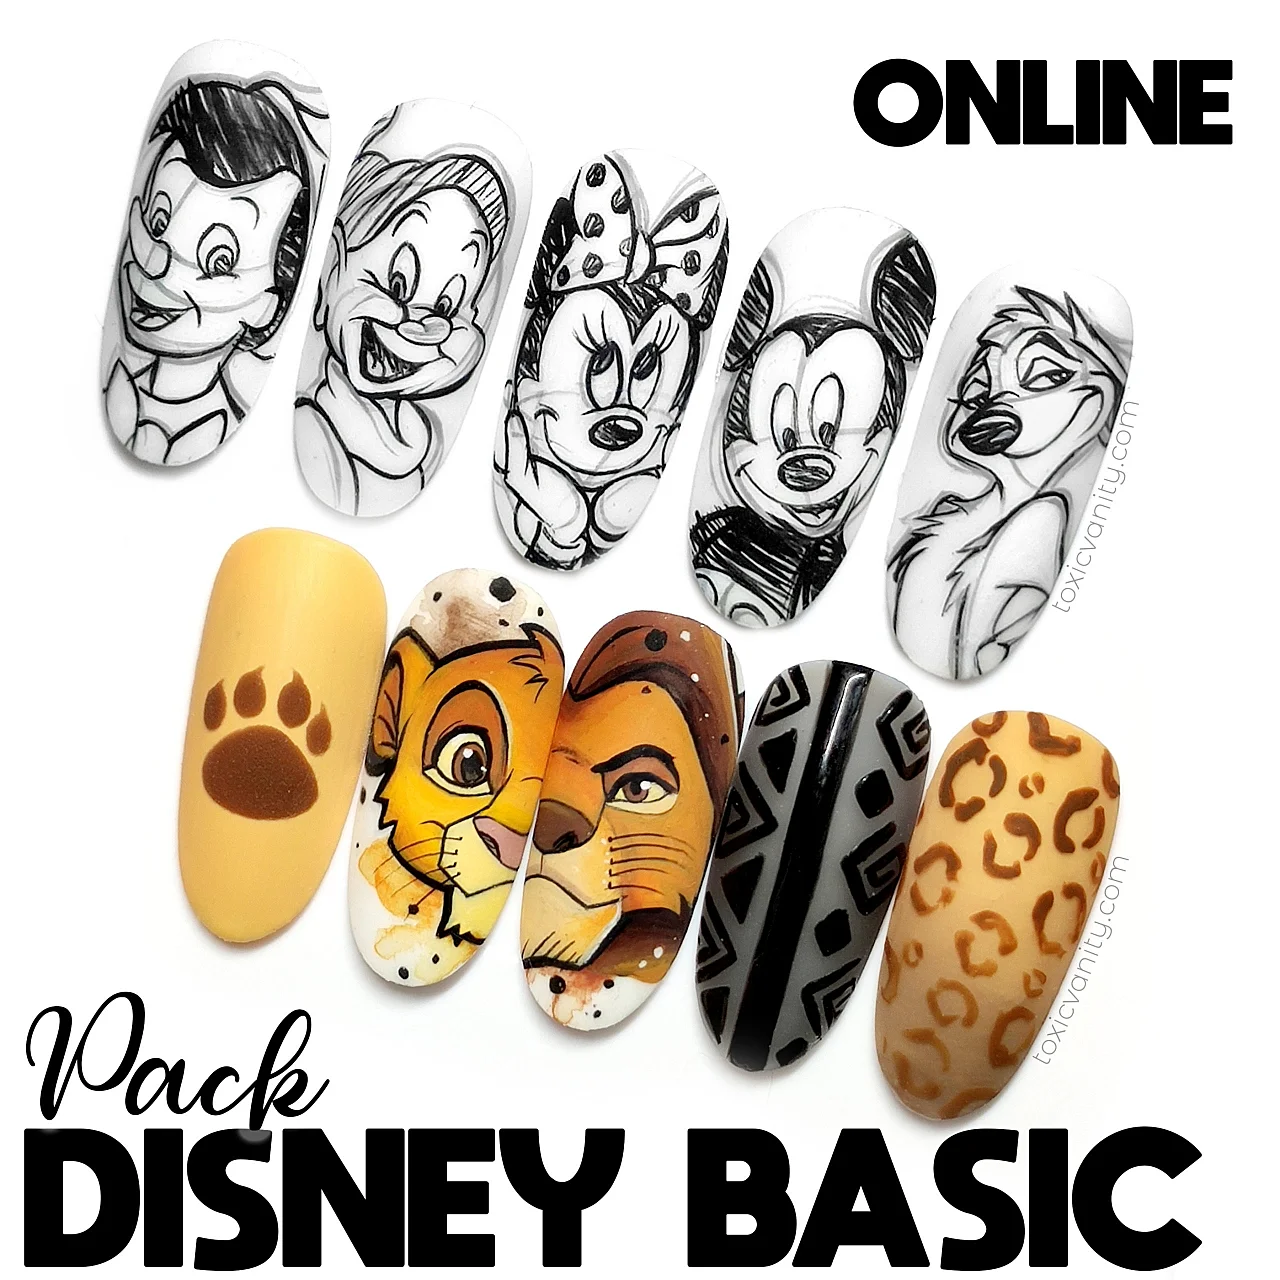 Pack Cursos Online Disney Basic 2